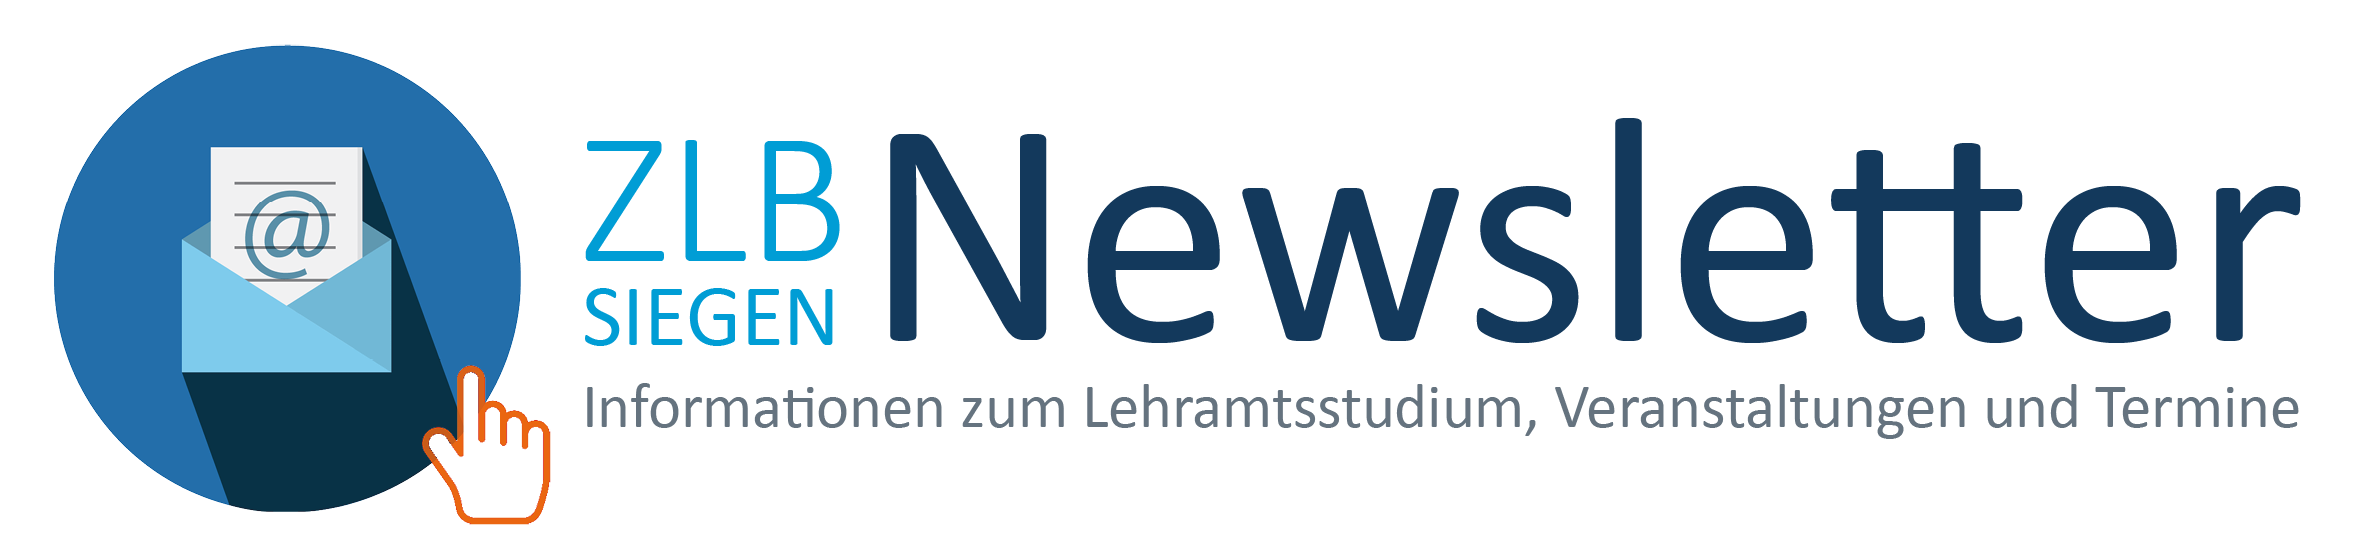 ZLB-Siegen-Newsletter Button